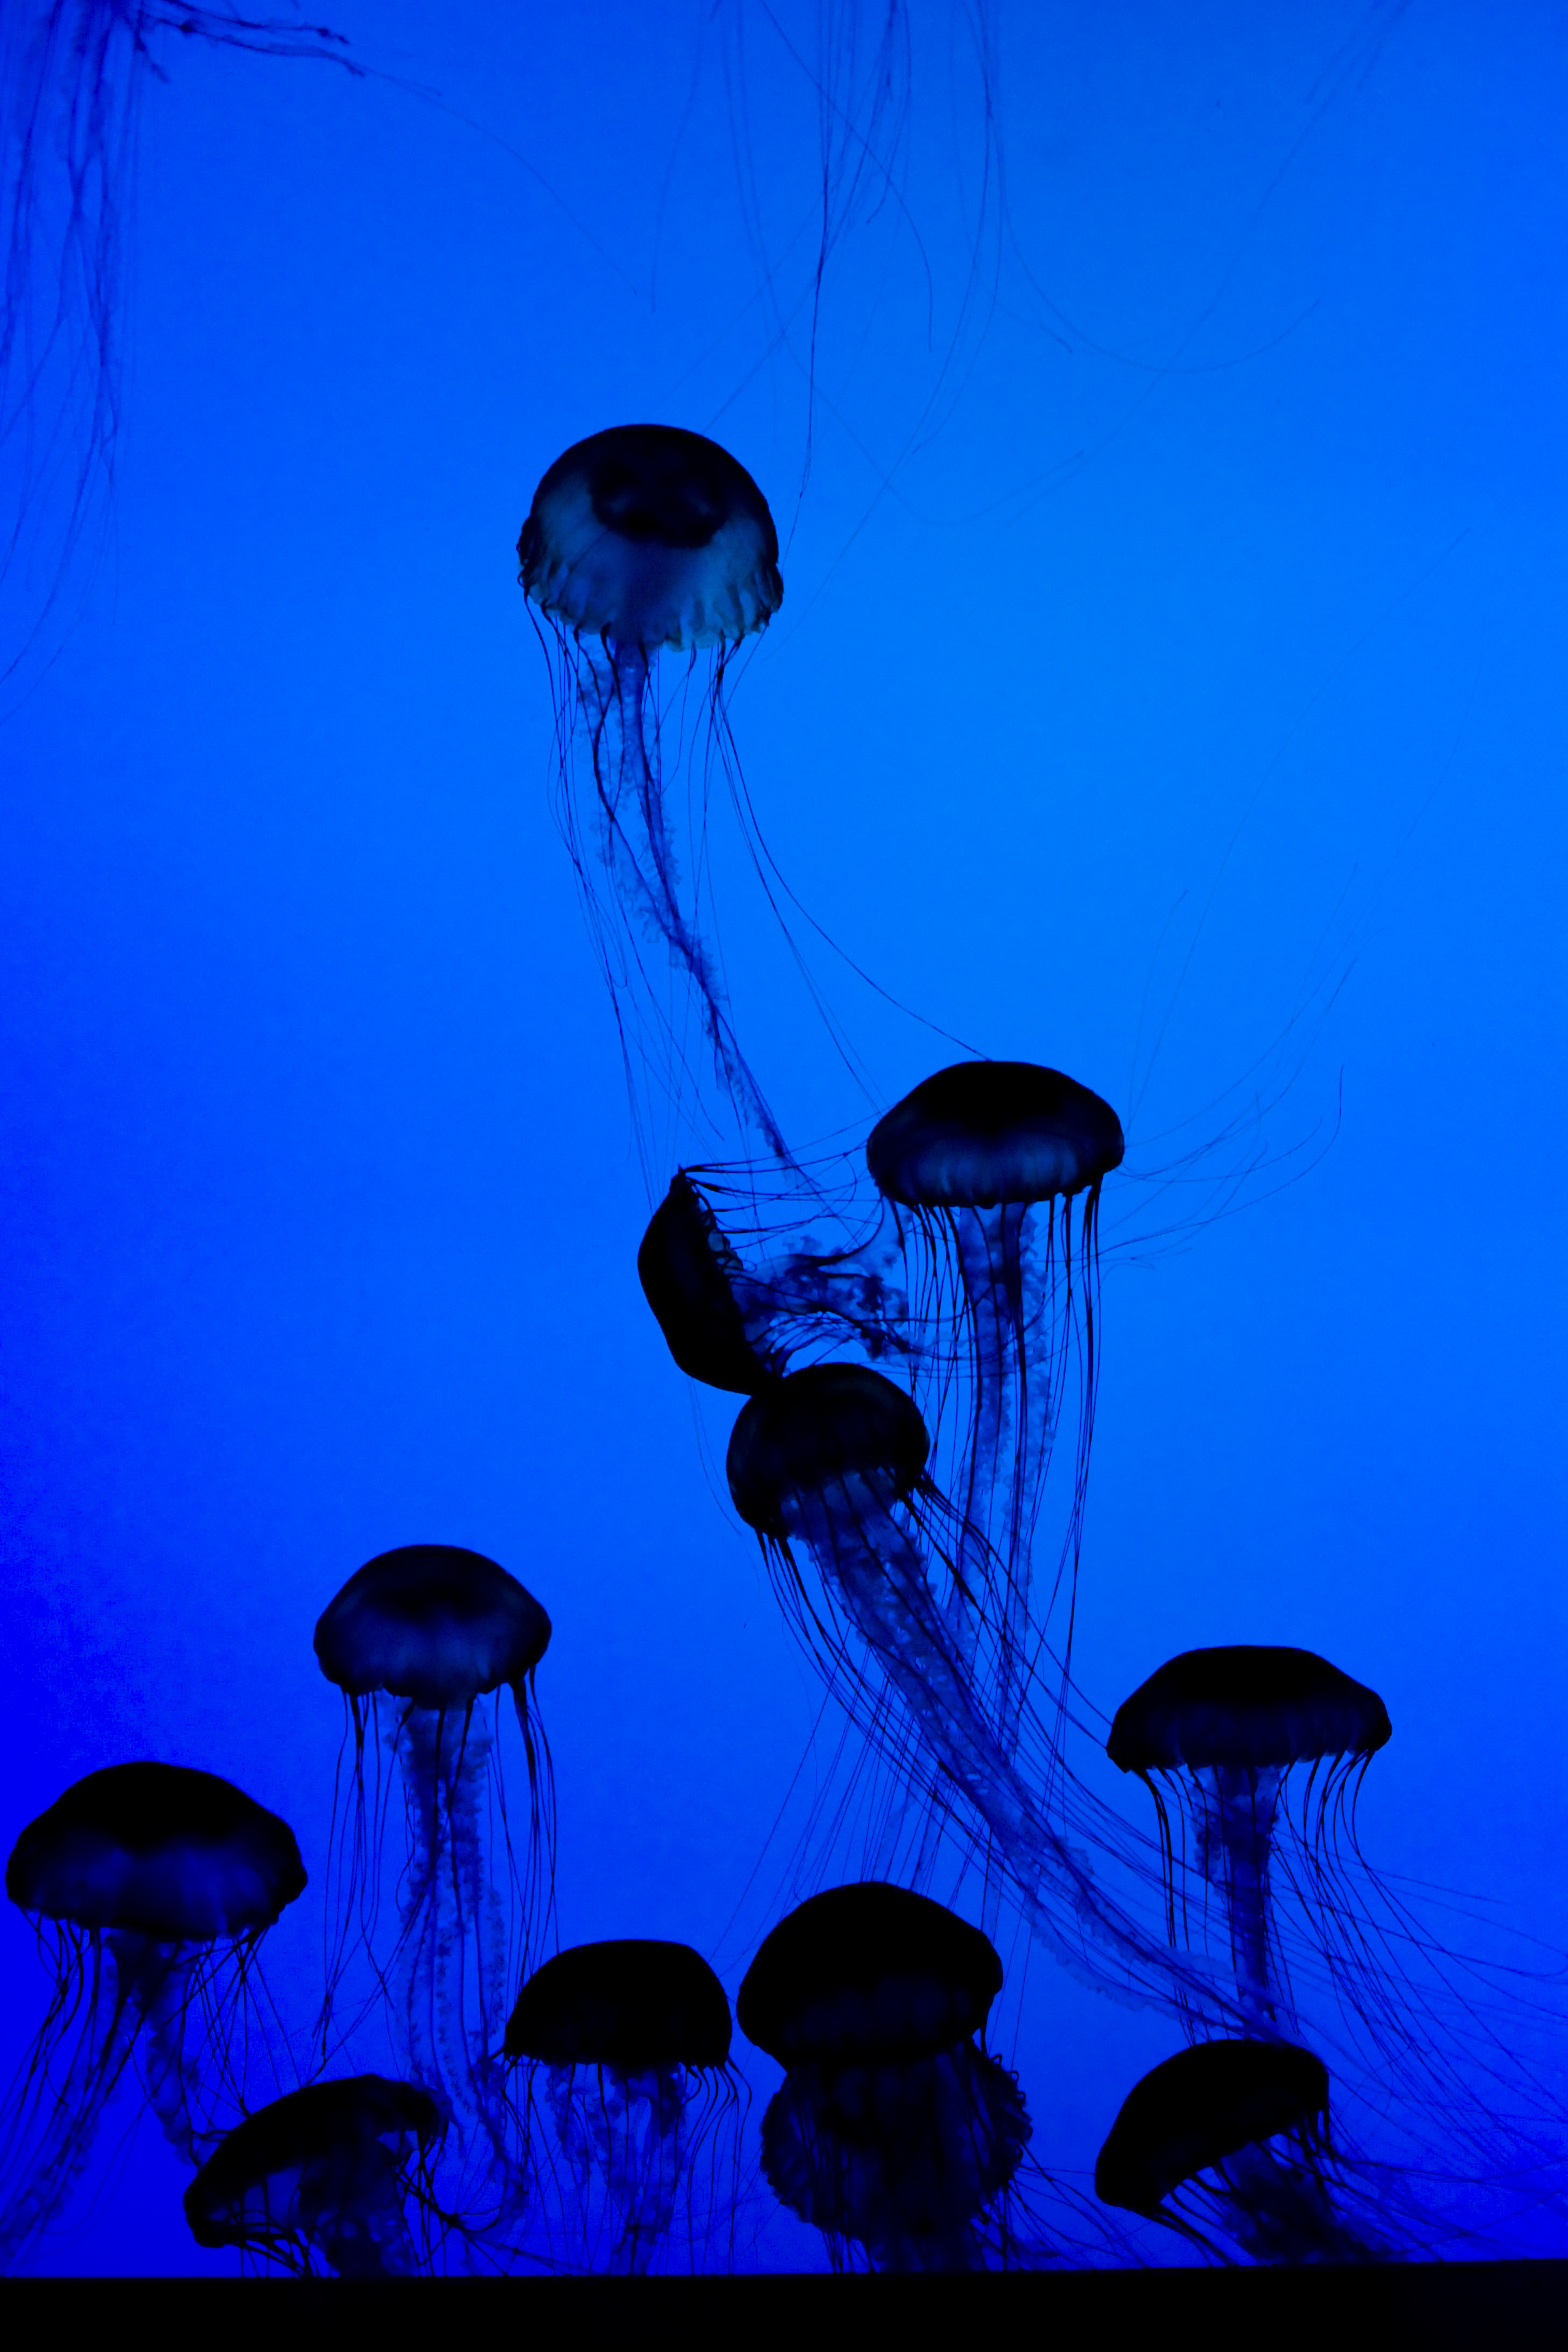 128141 descargar imagen animales, medusa, azul, oscuro, mundo submarino, tentáculos: fondos de pantalla y protectores de pantalla gratis